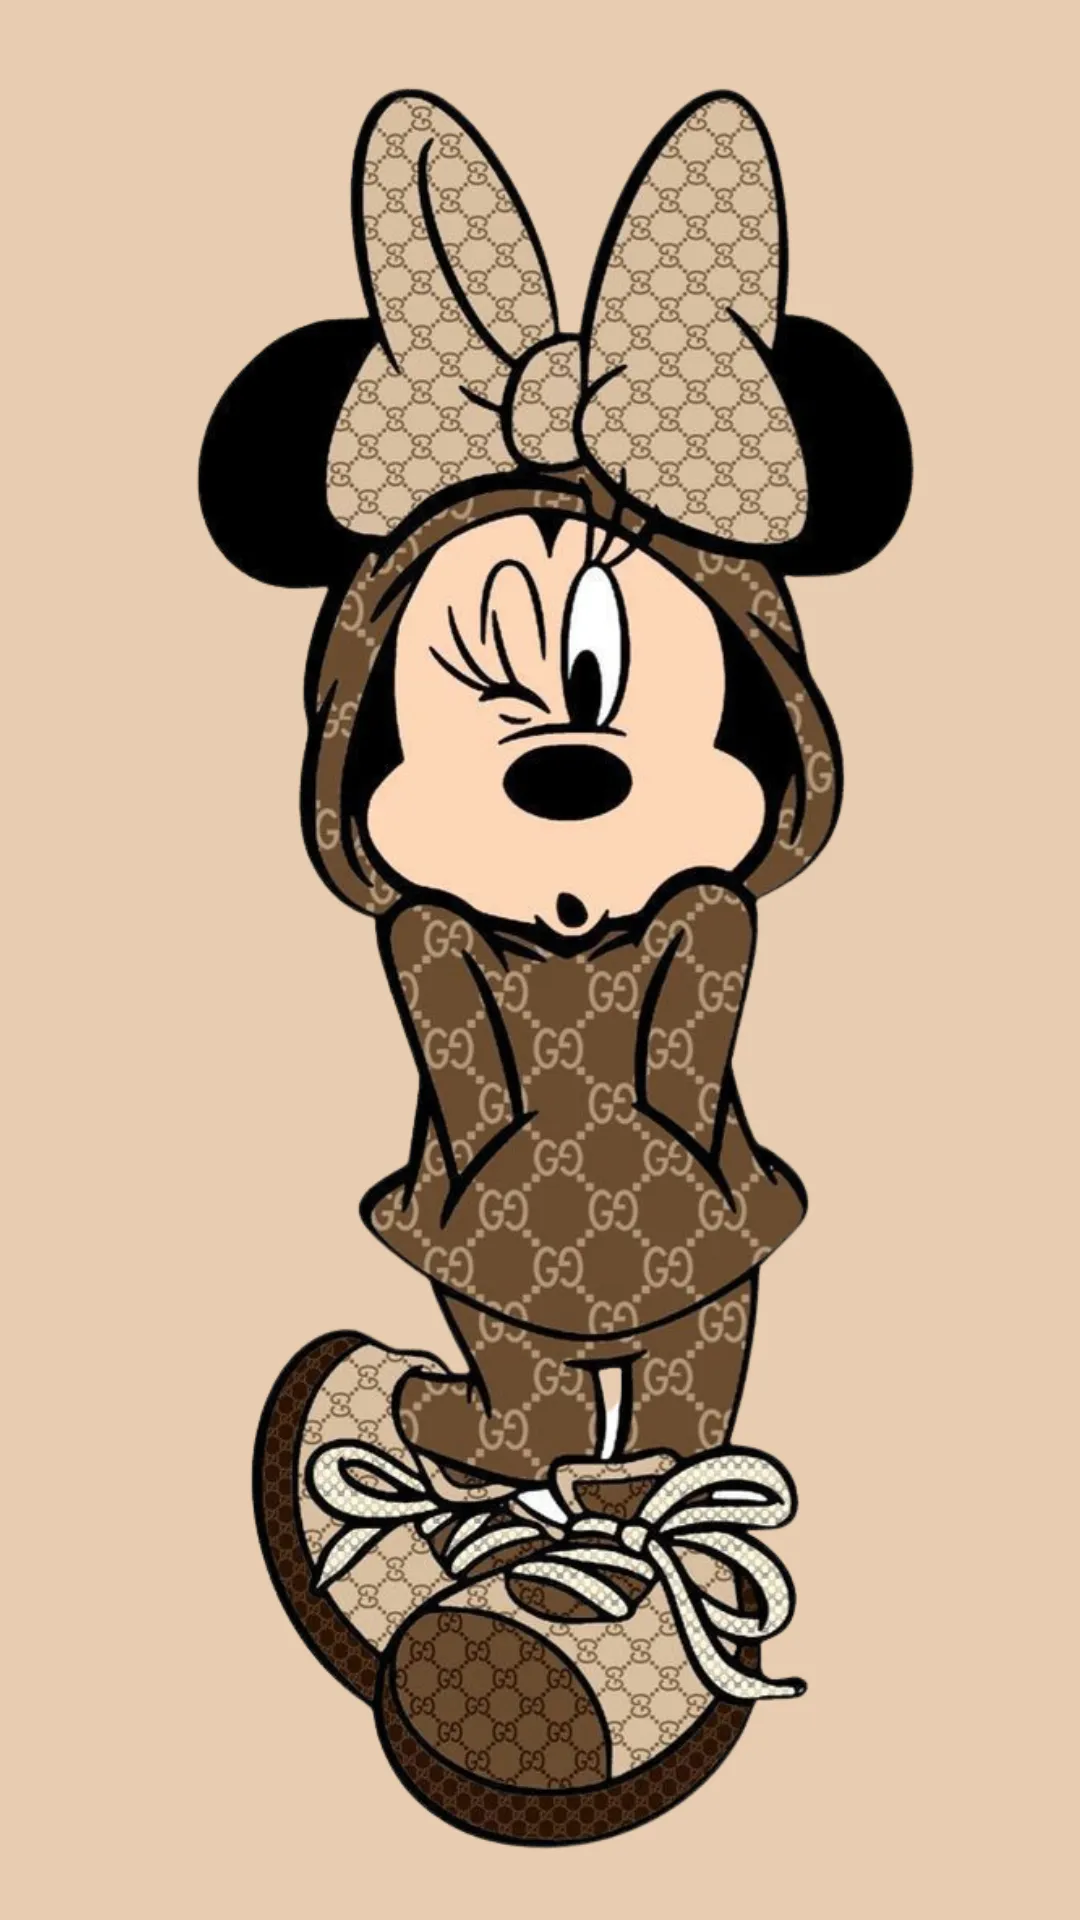 Minnie fashion